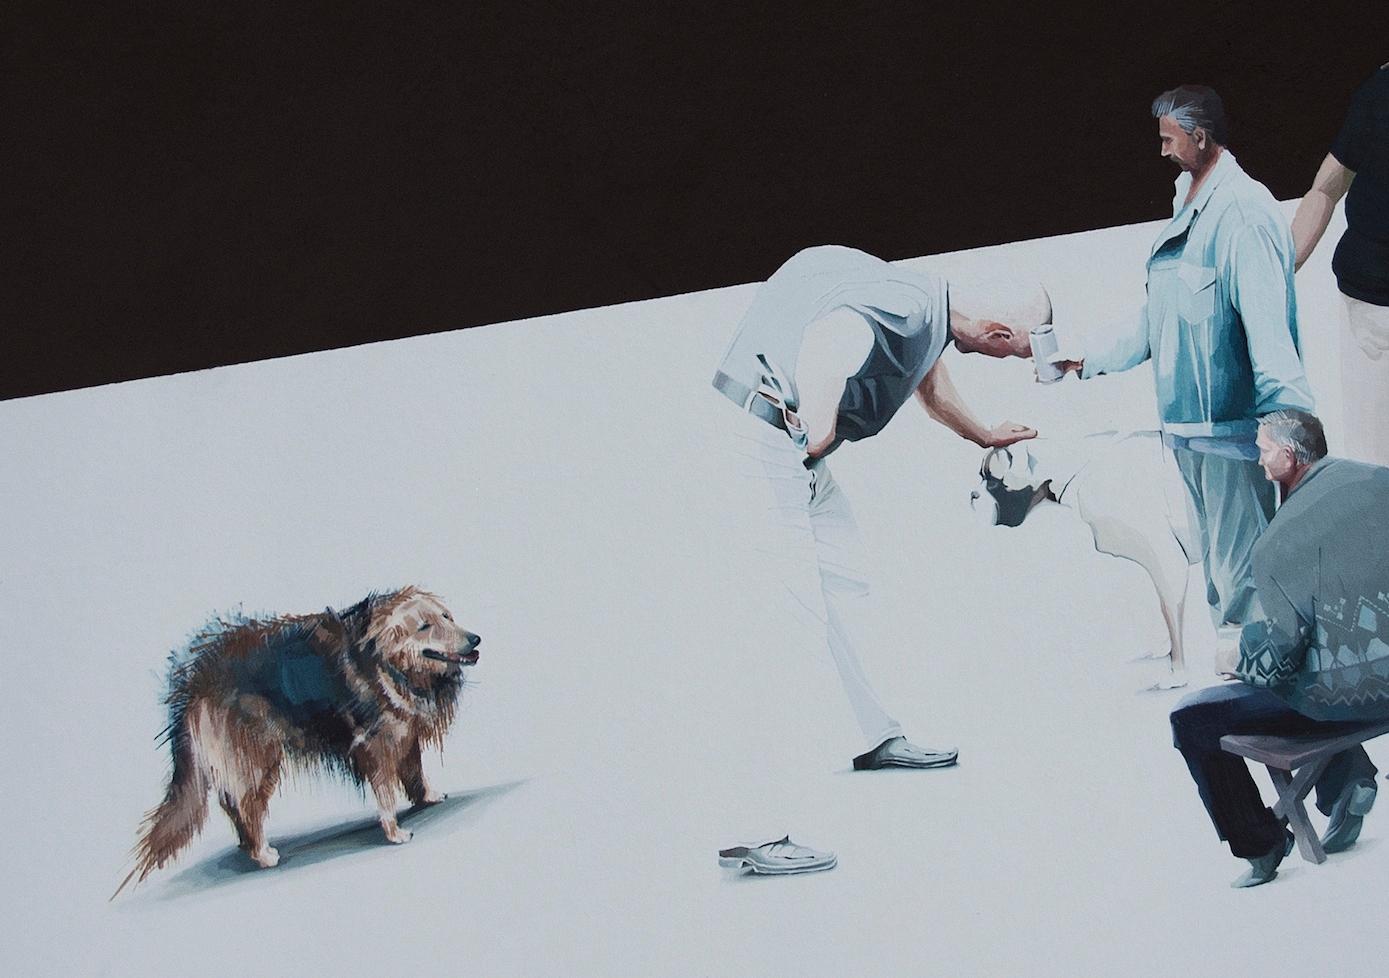 Ohne Titel  5 - Serie Final Fantasy, Modernes figuratives Gemälde mit Hunden – Painting von Magdalena Peszkowska